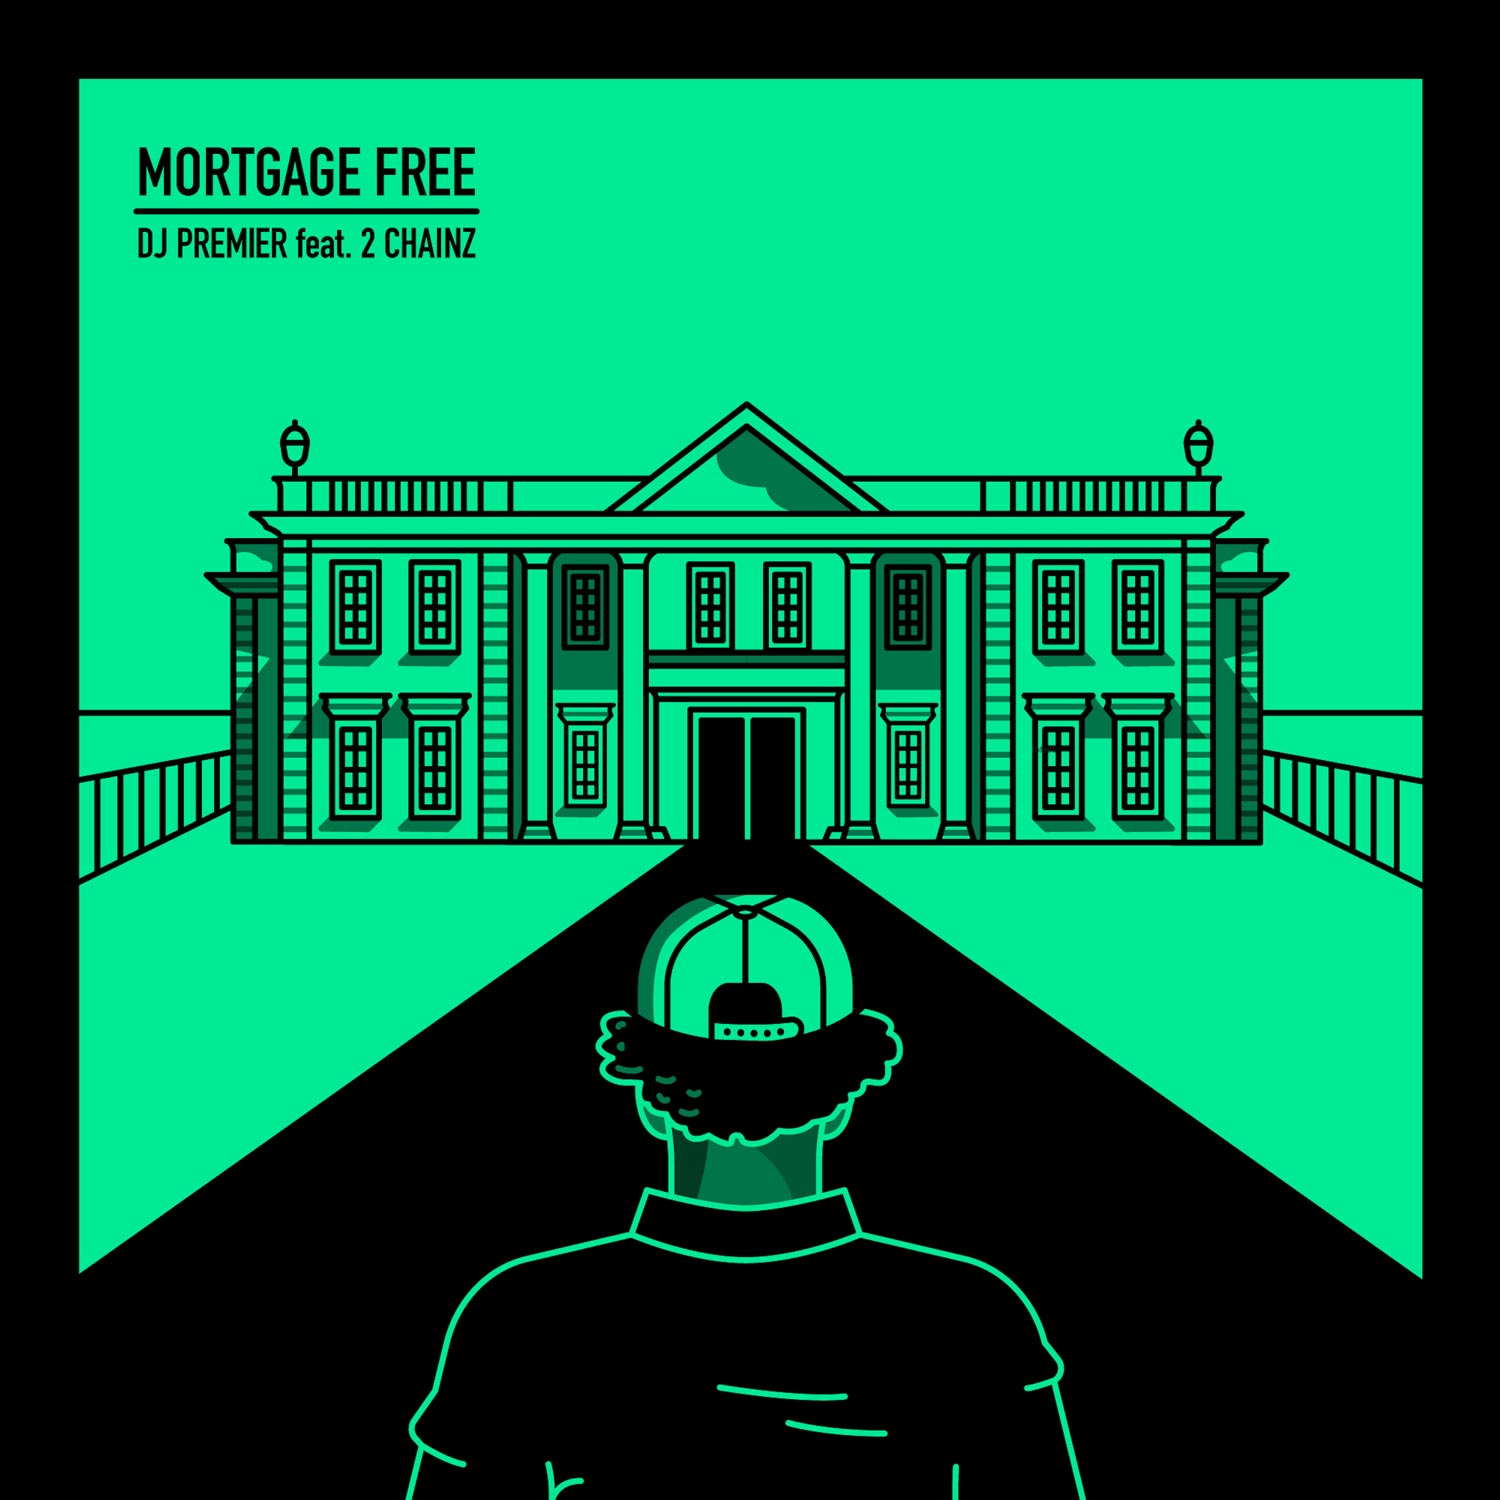 Dj_premier___2_chainz-_mortgage_free_digital_artwork